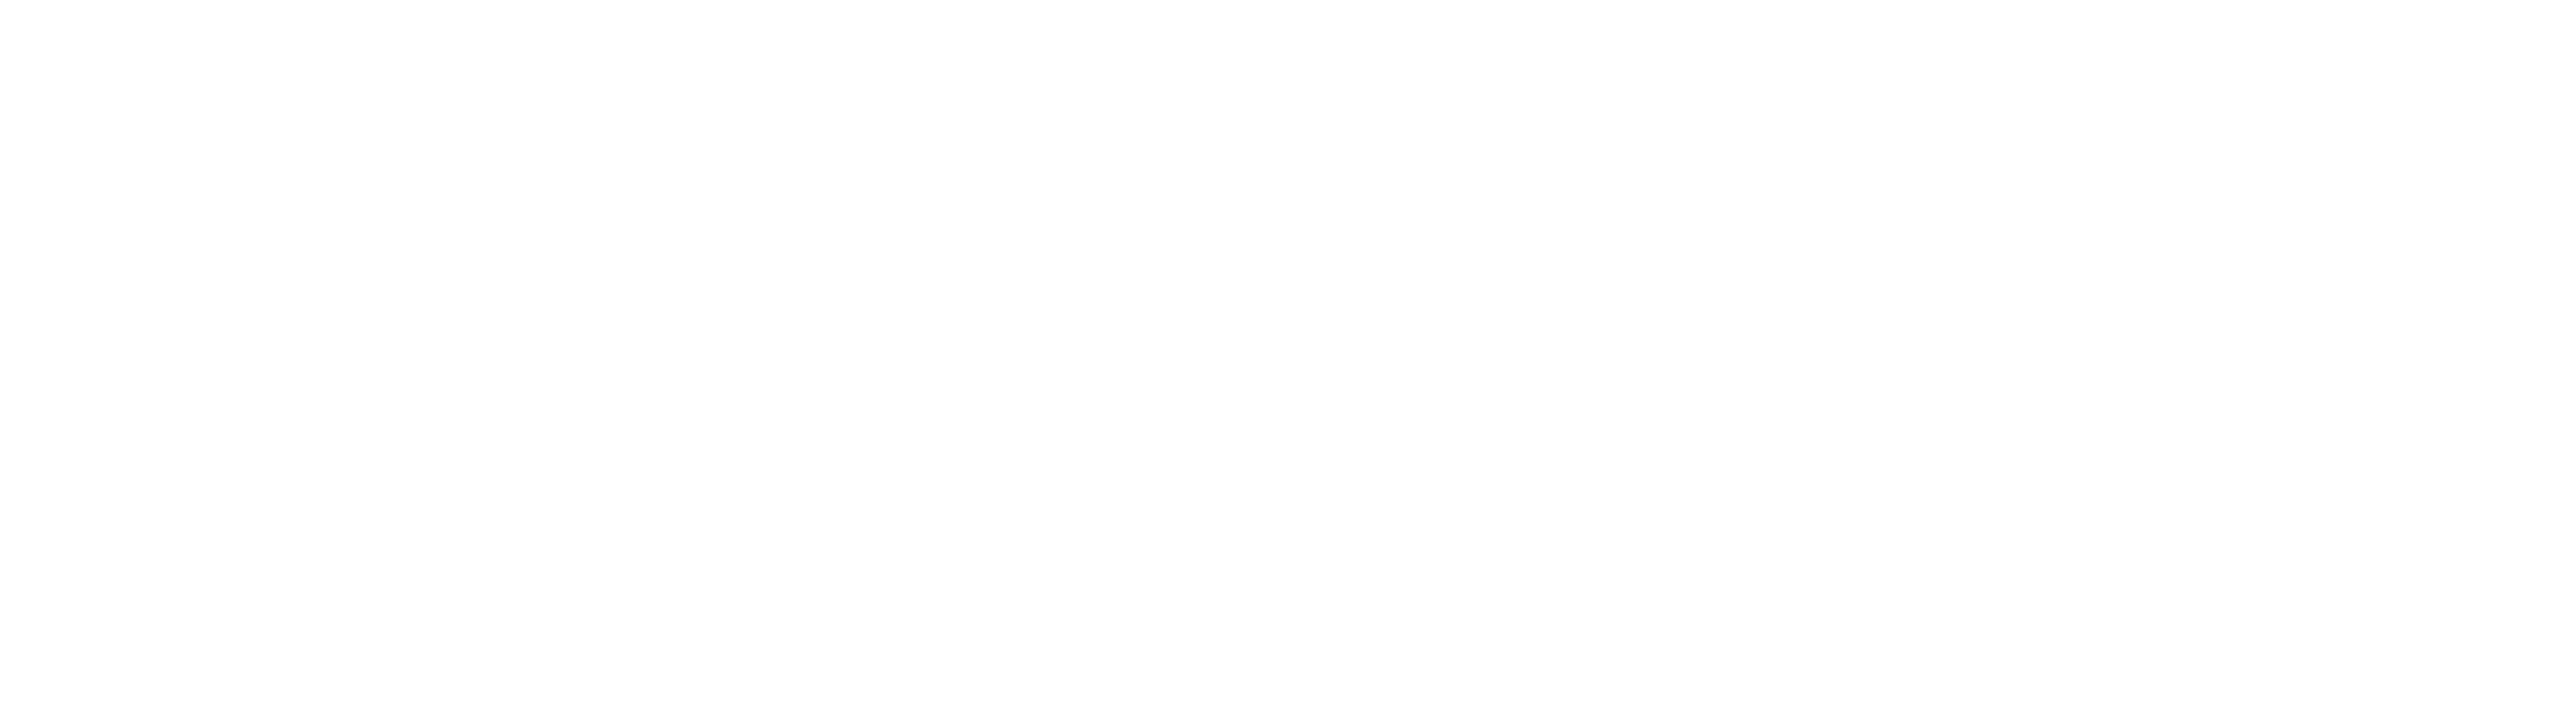 Pilopeptan Logo Blanco